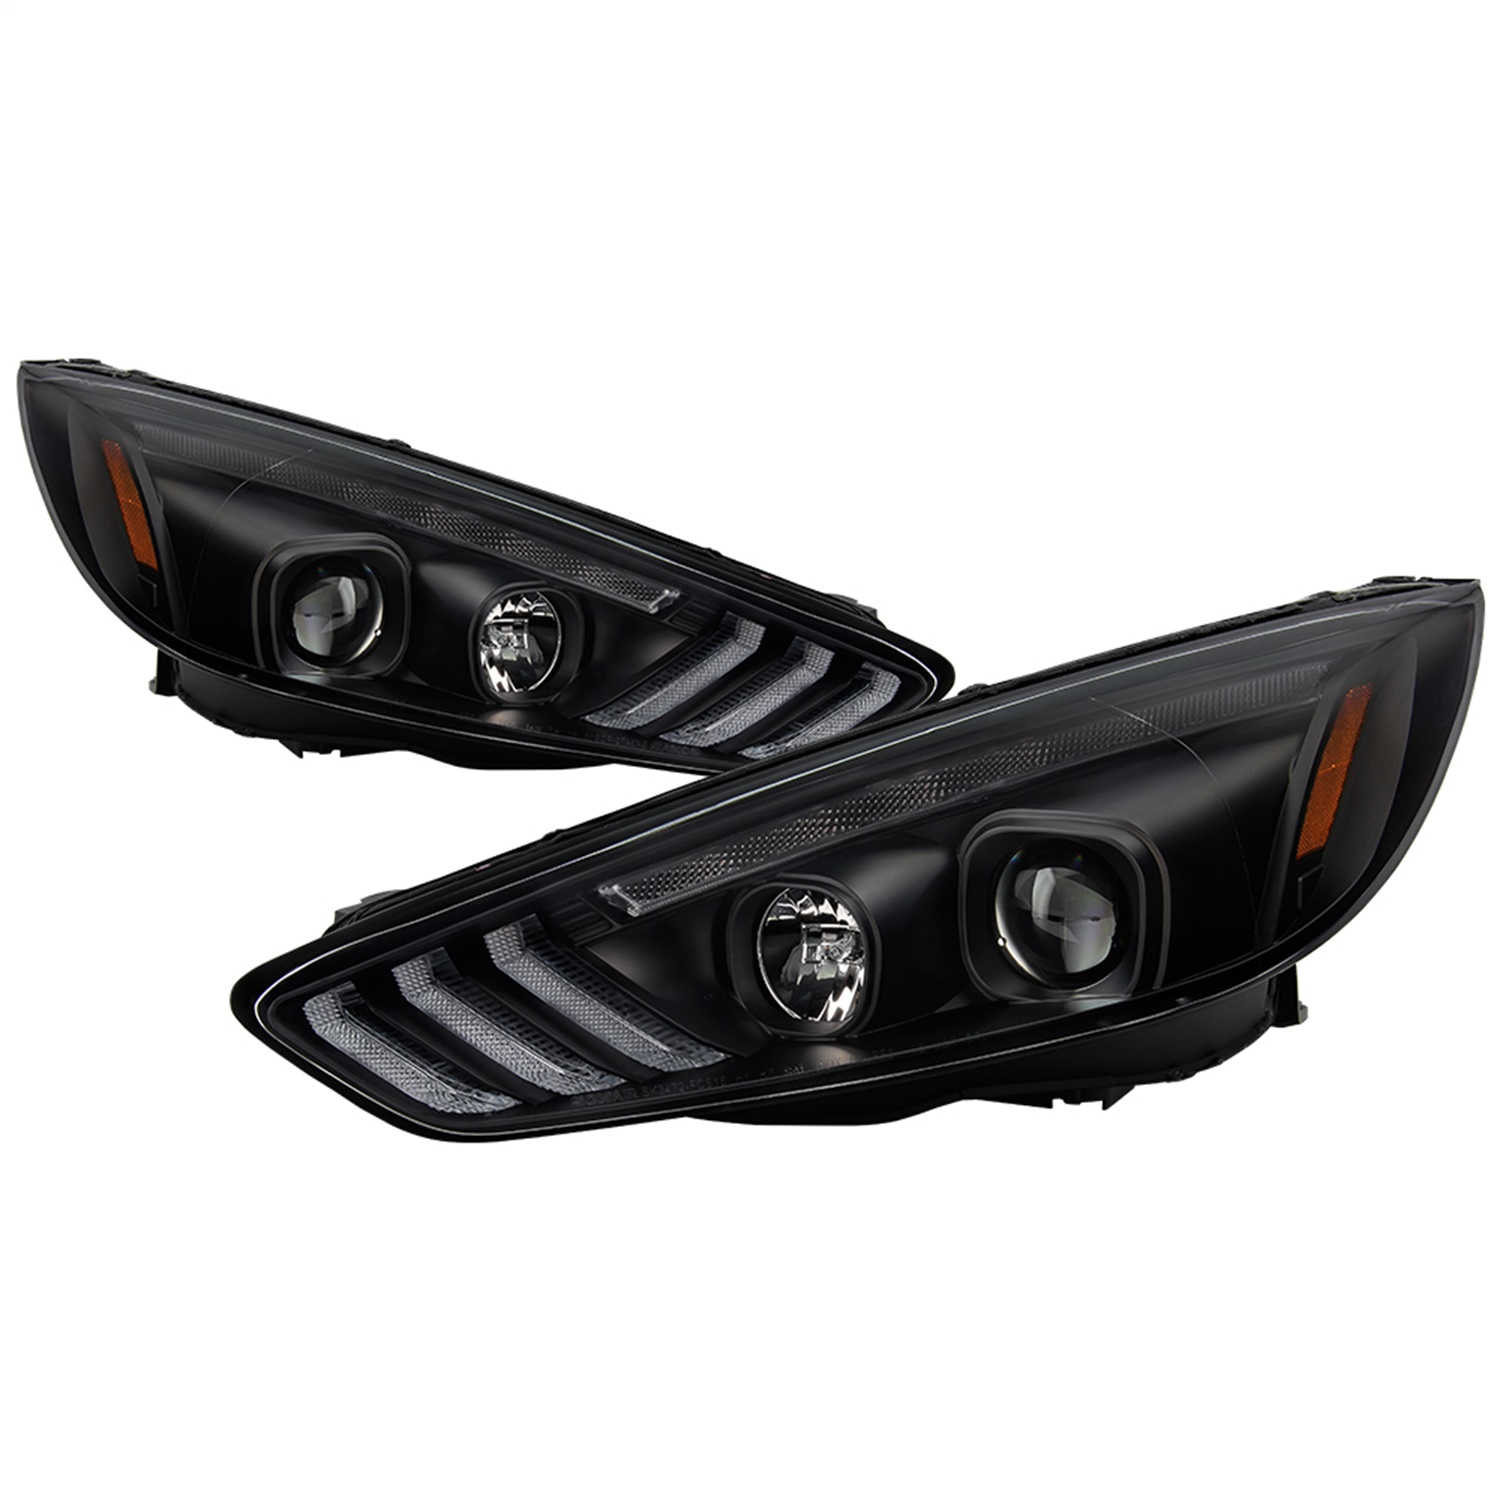 Spyder Auto 5086105 Projector Headlights Fits 15-18 Focus